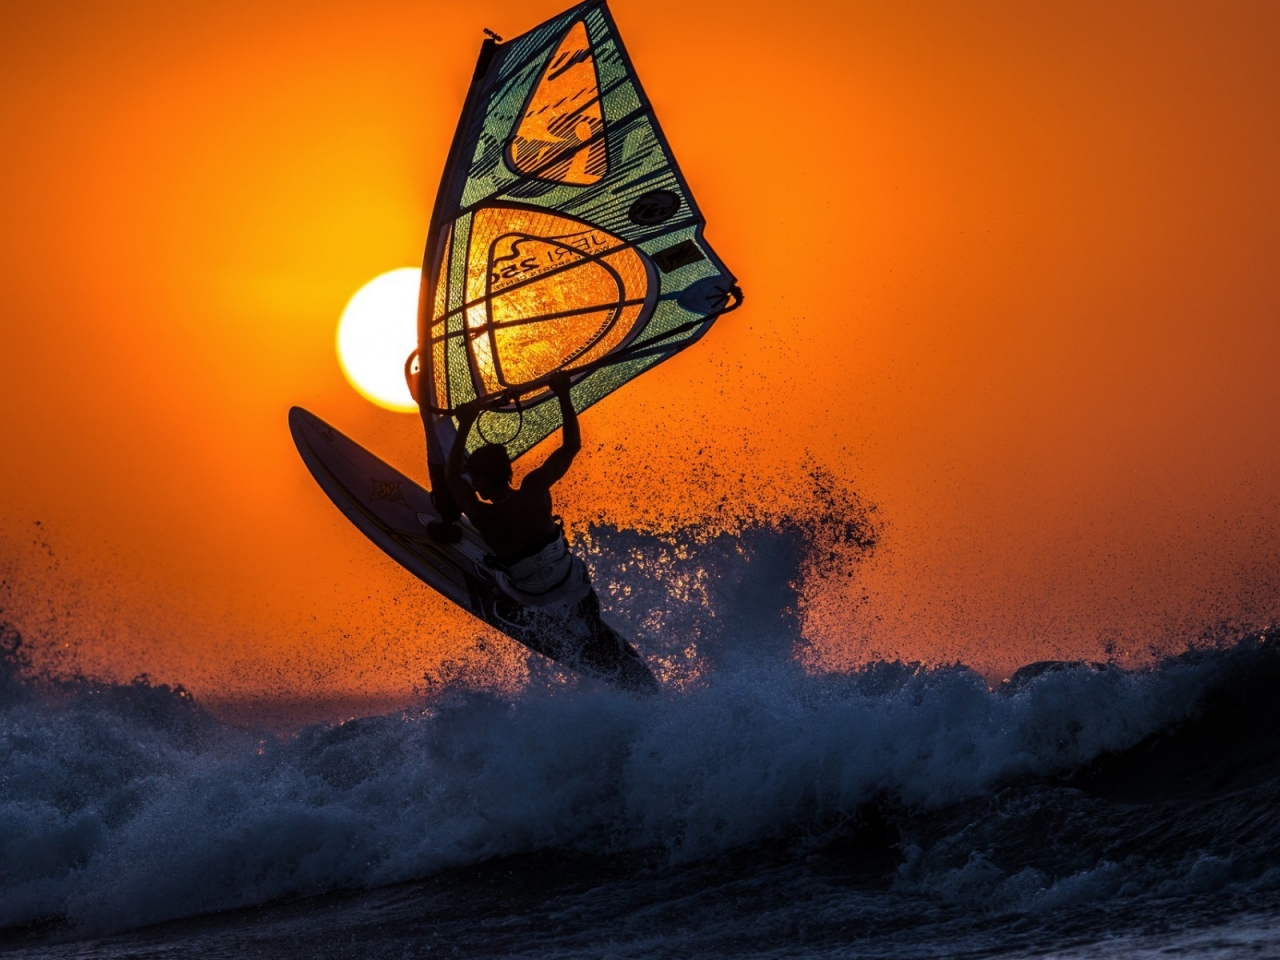 Windsurfing for 1280 x 960 resolution